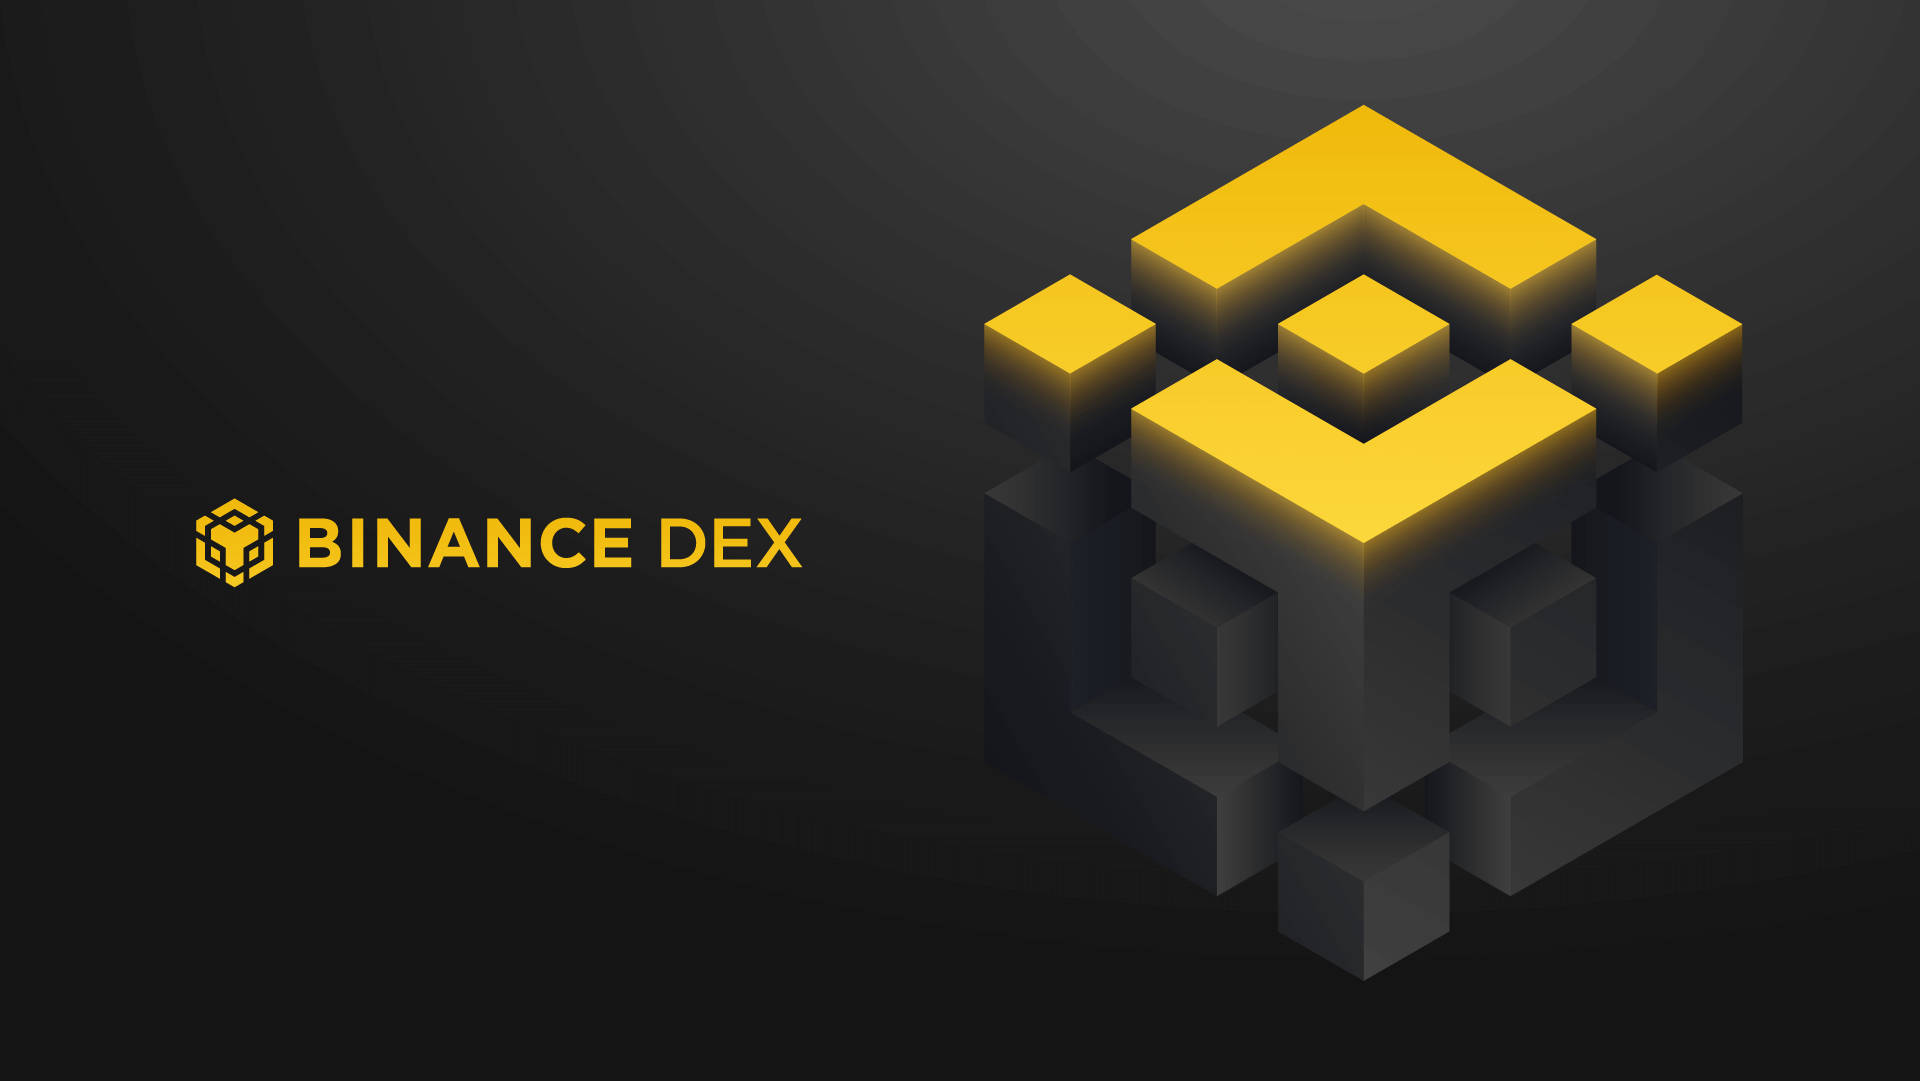 Binance Dex Cube Wallpaper